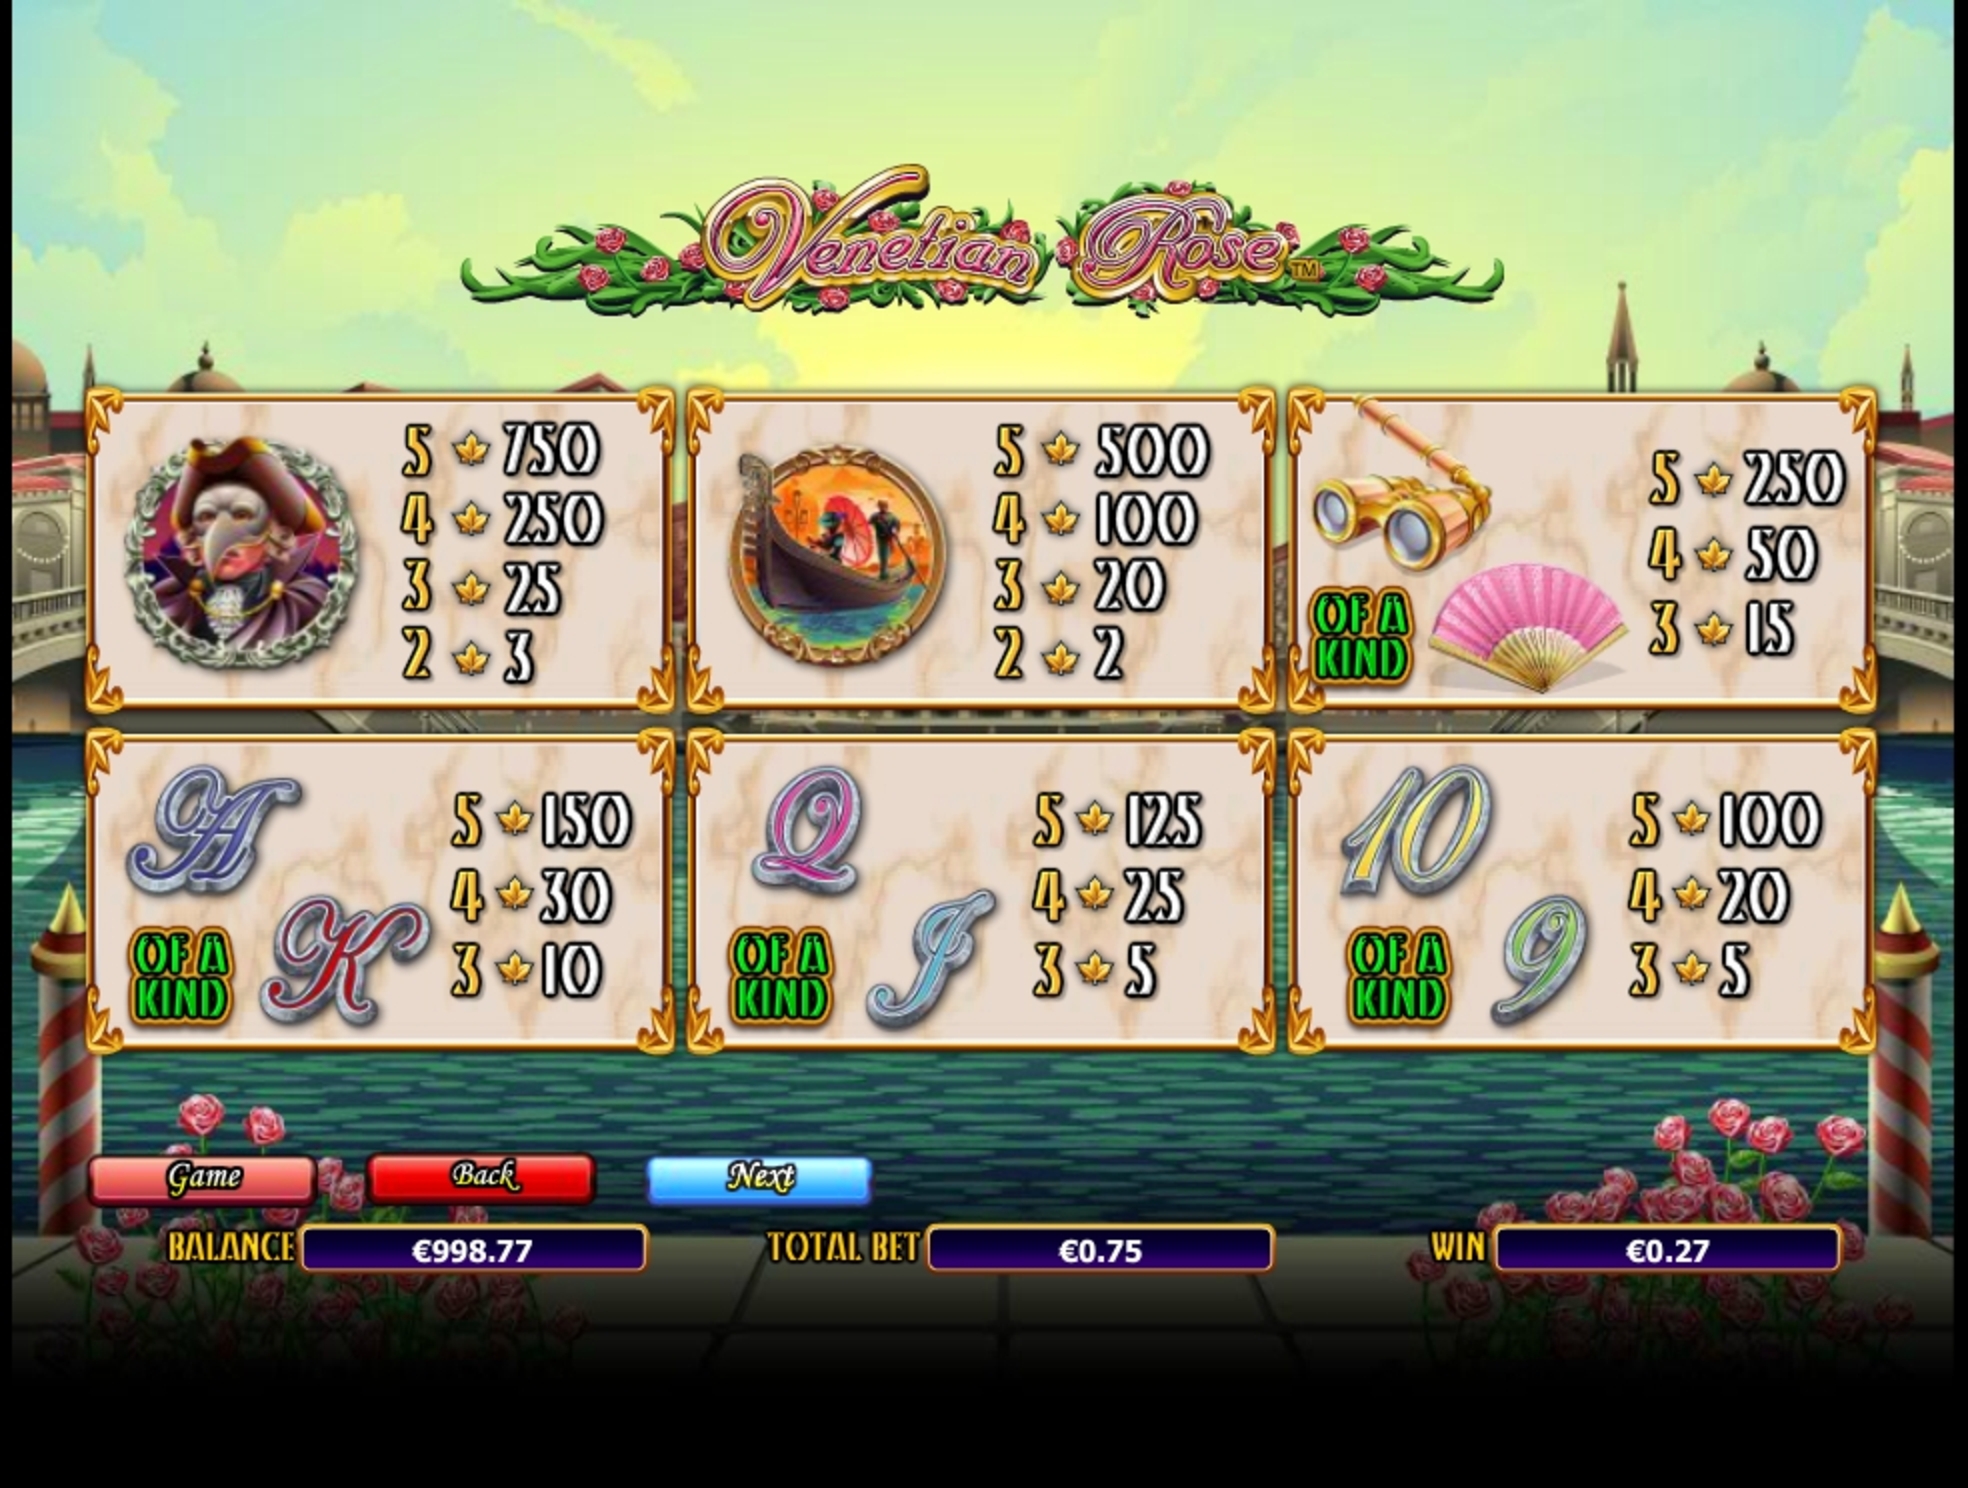 Info of Venetian Rose Slot Game by NextGen Gaming